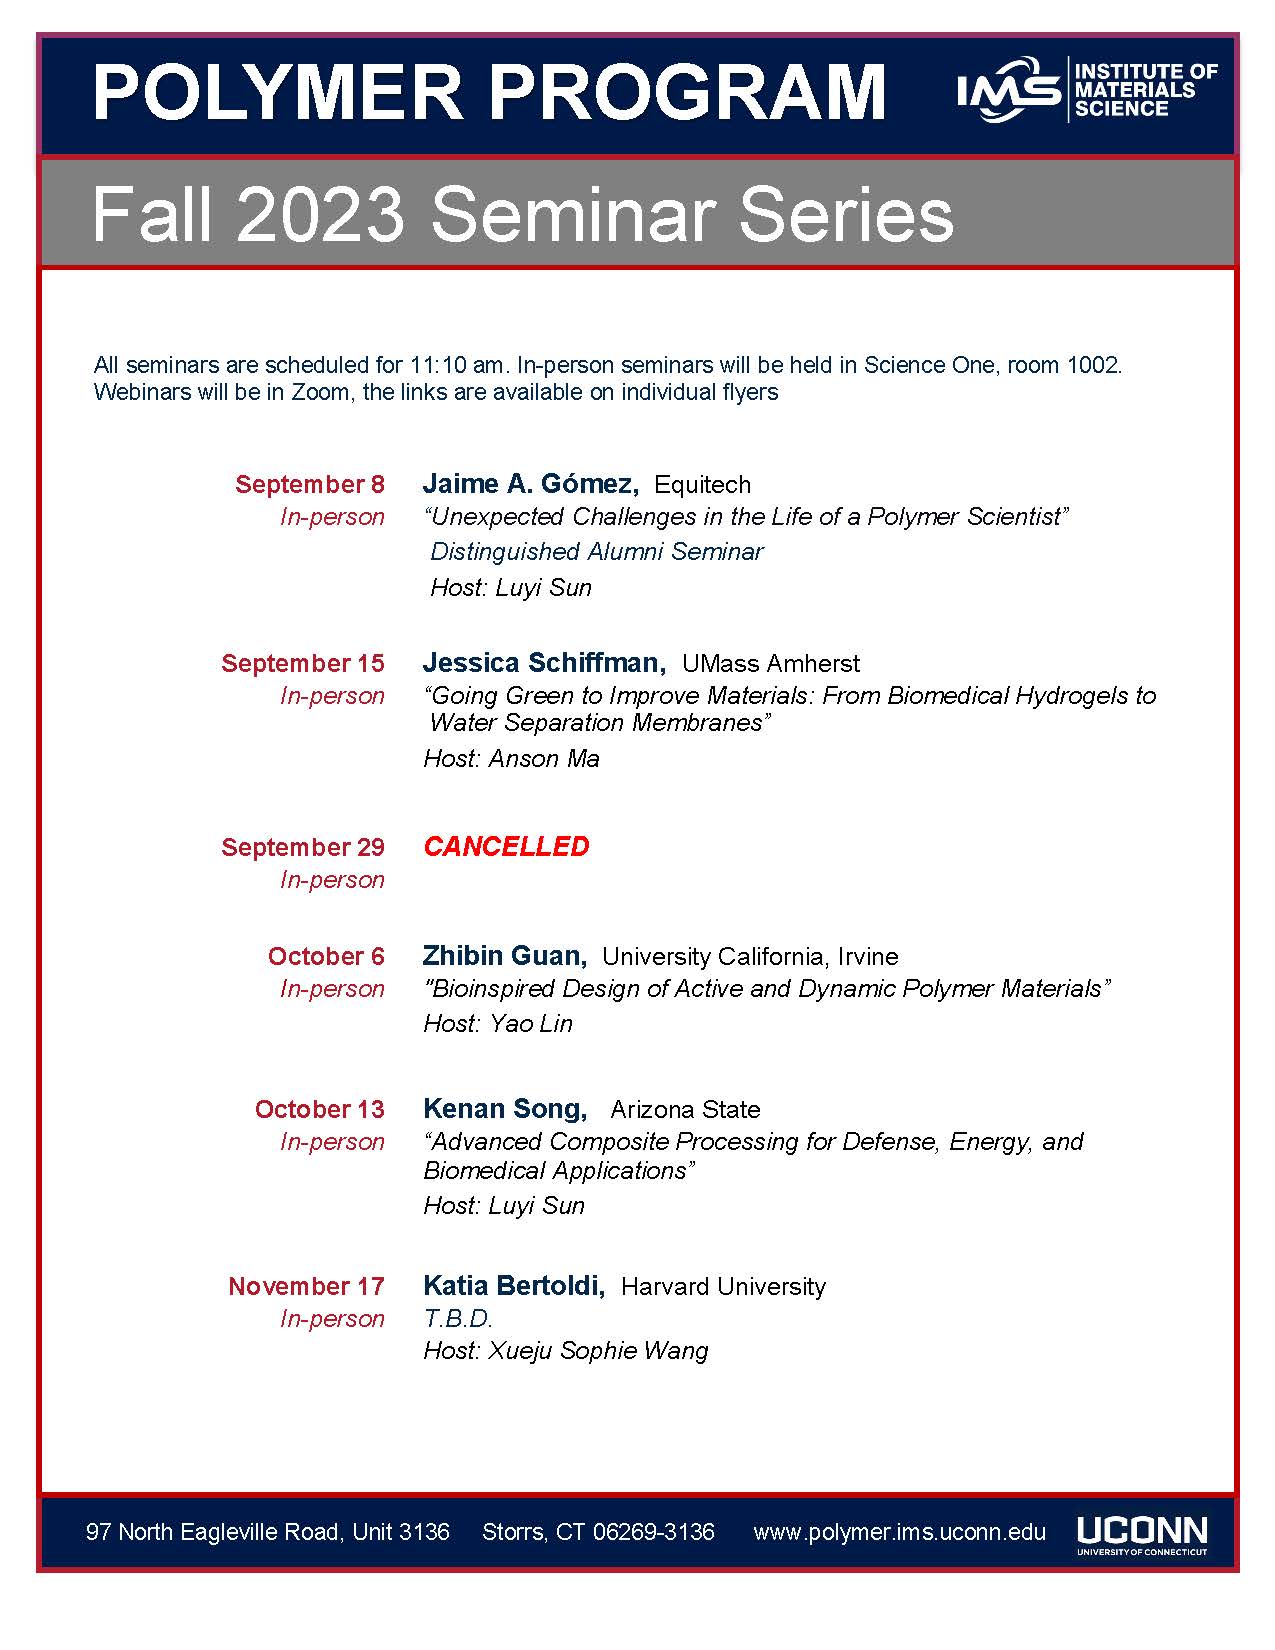 Polymer Program Seminar Series Fall 2023